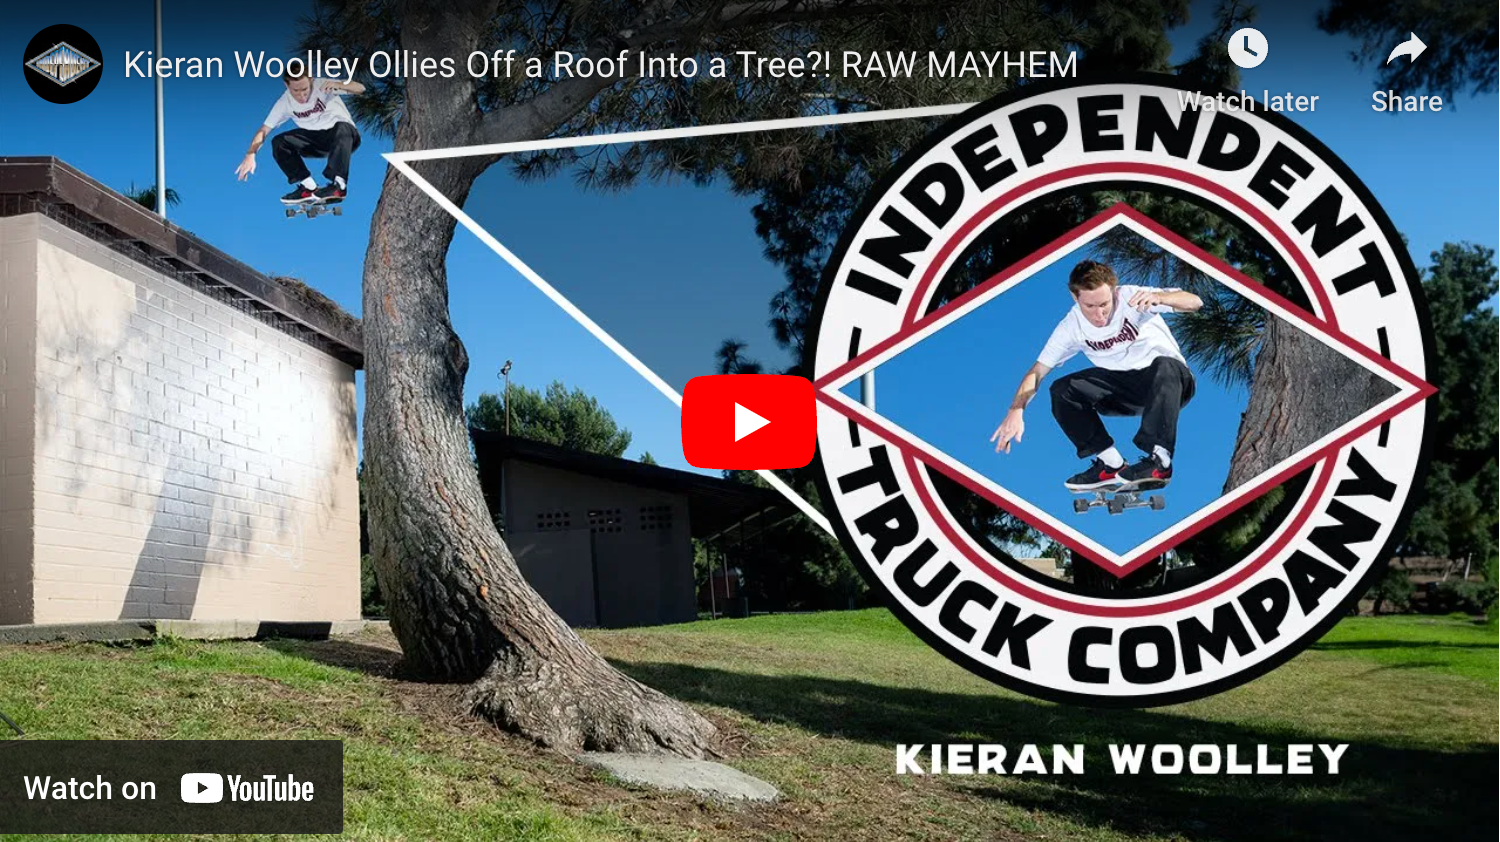 Kieran Woolley's "Raw Mayhem" Indy Video